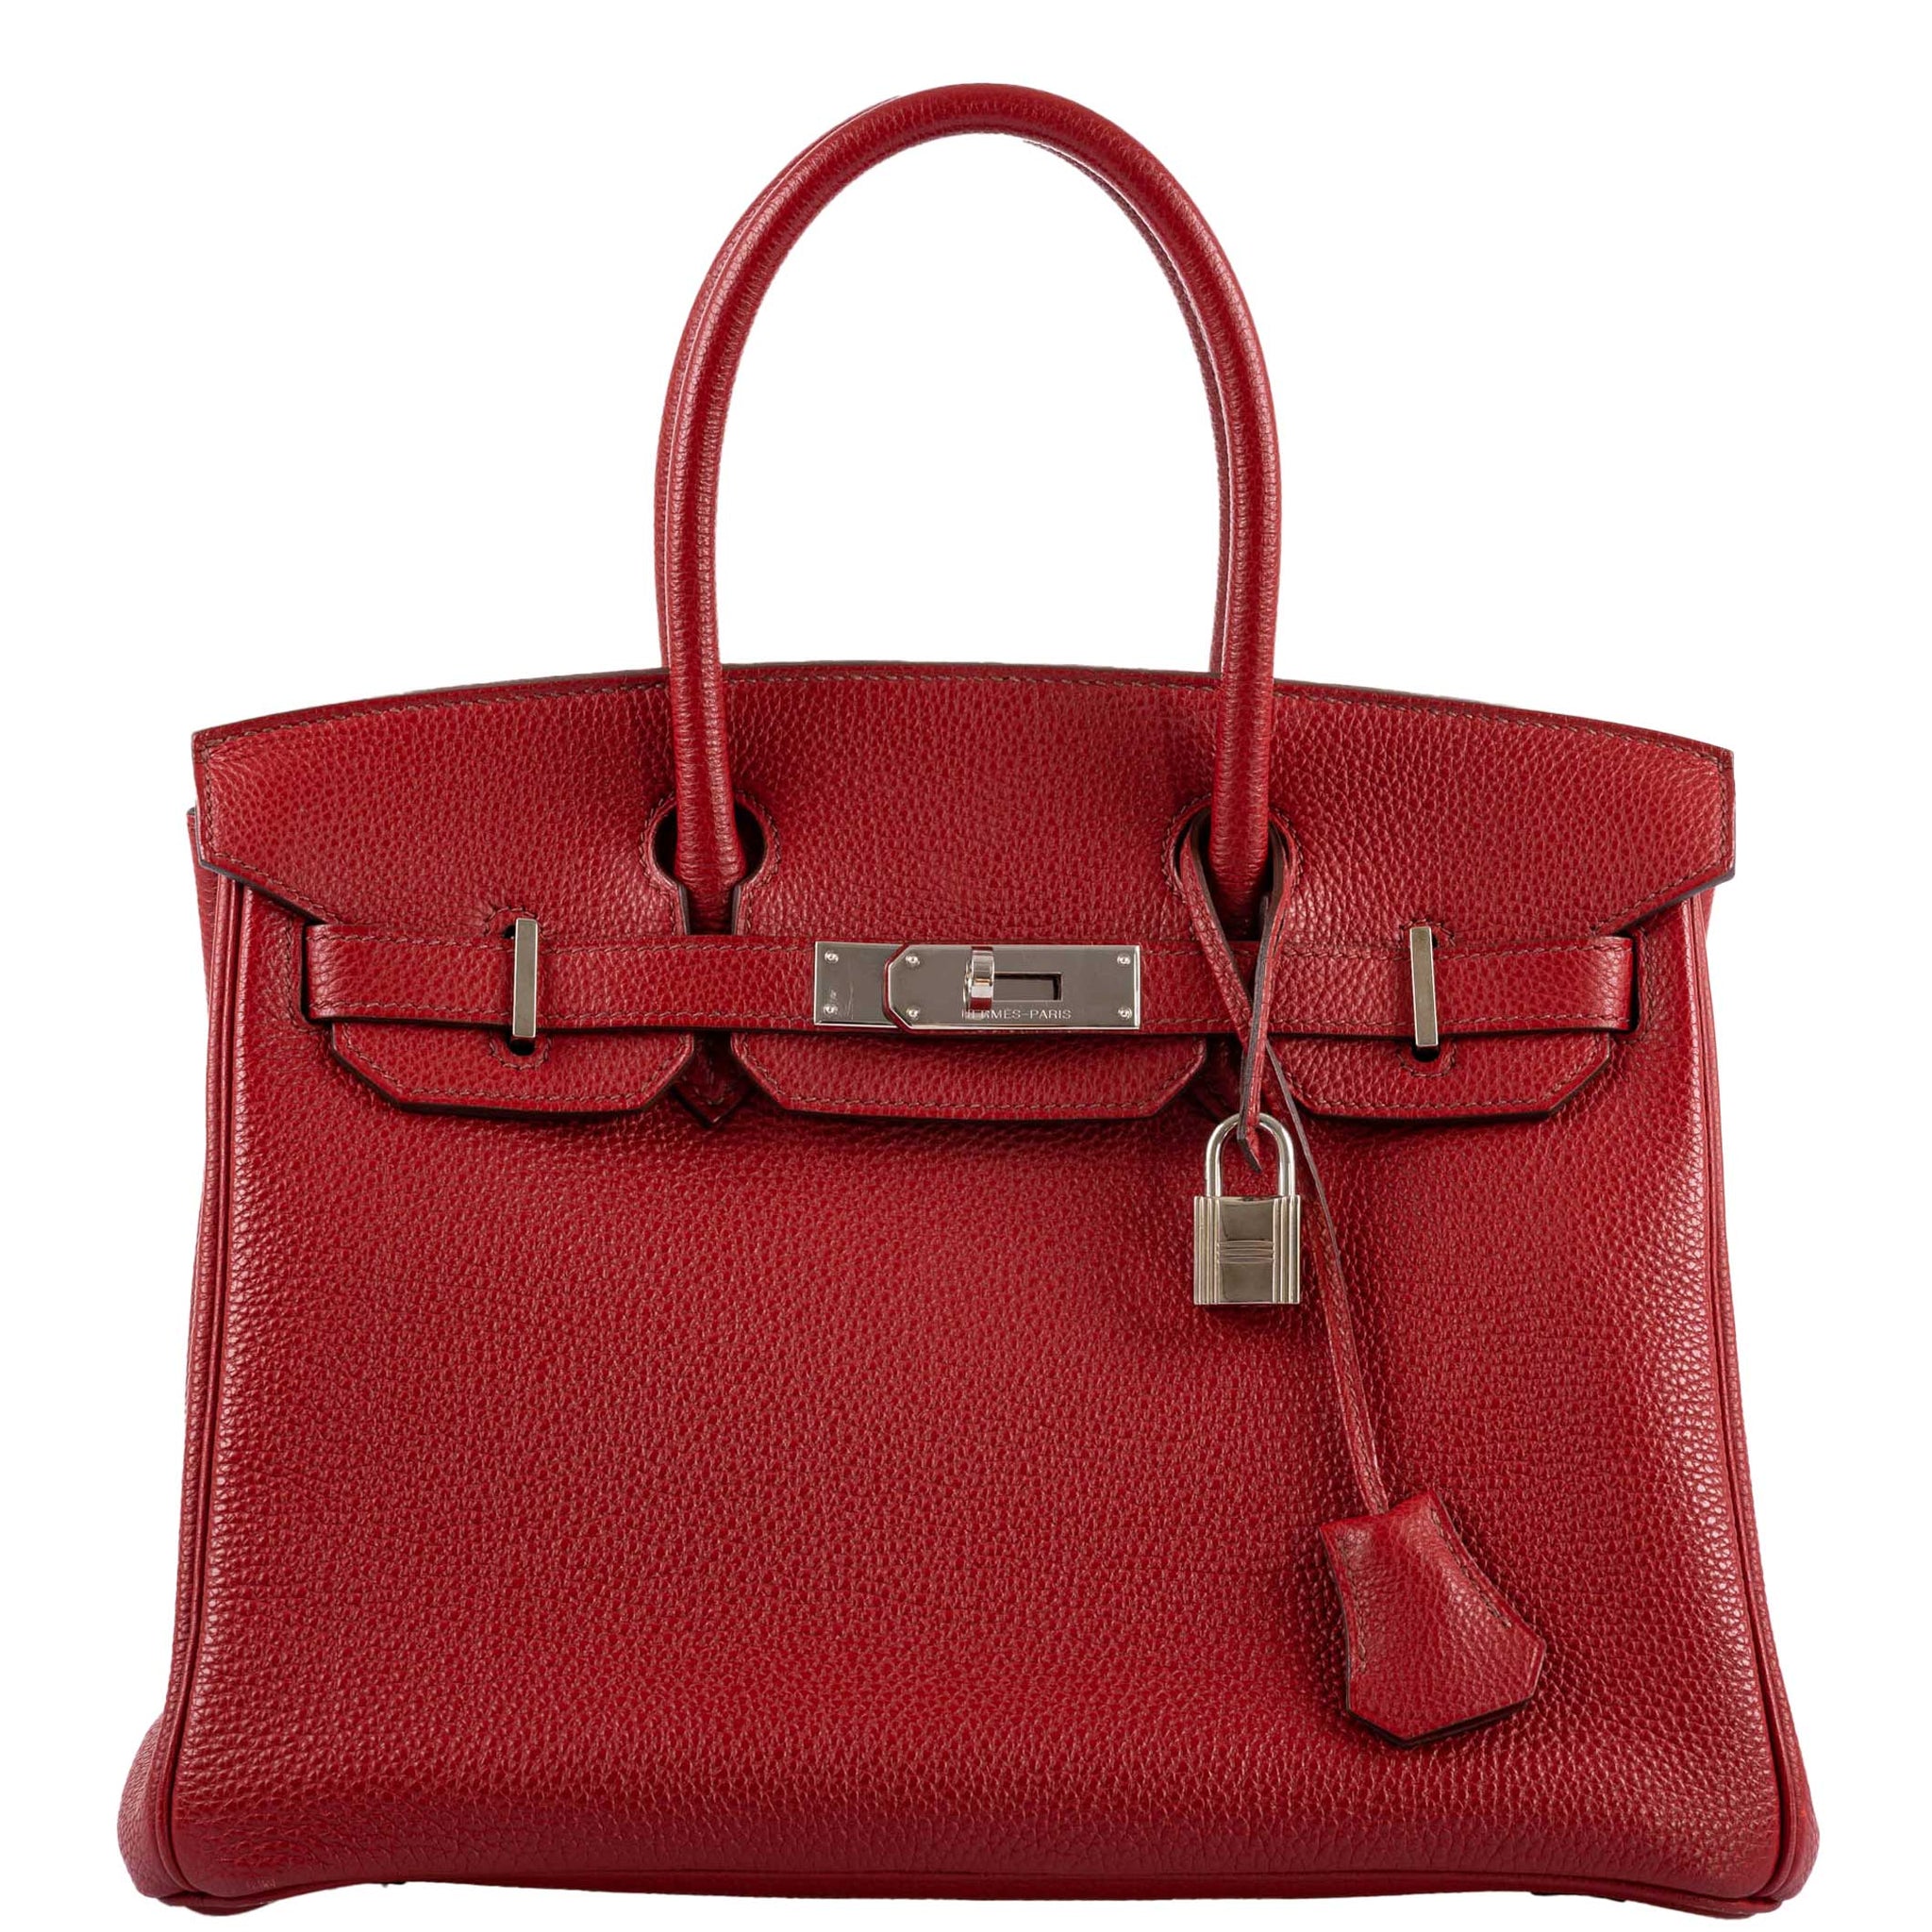 Hermes 35cm Rouge H Togo Leather Birkin Bag with Palladium